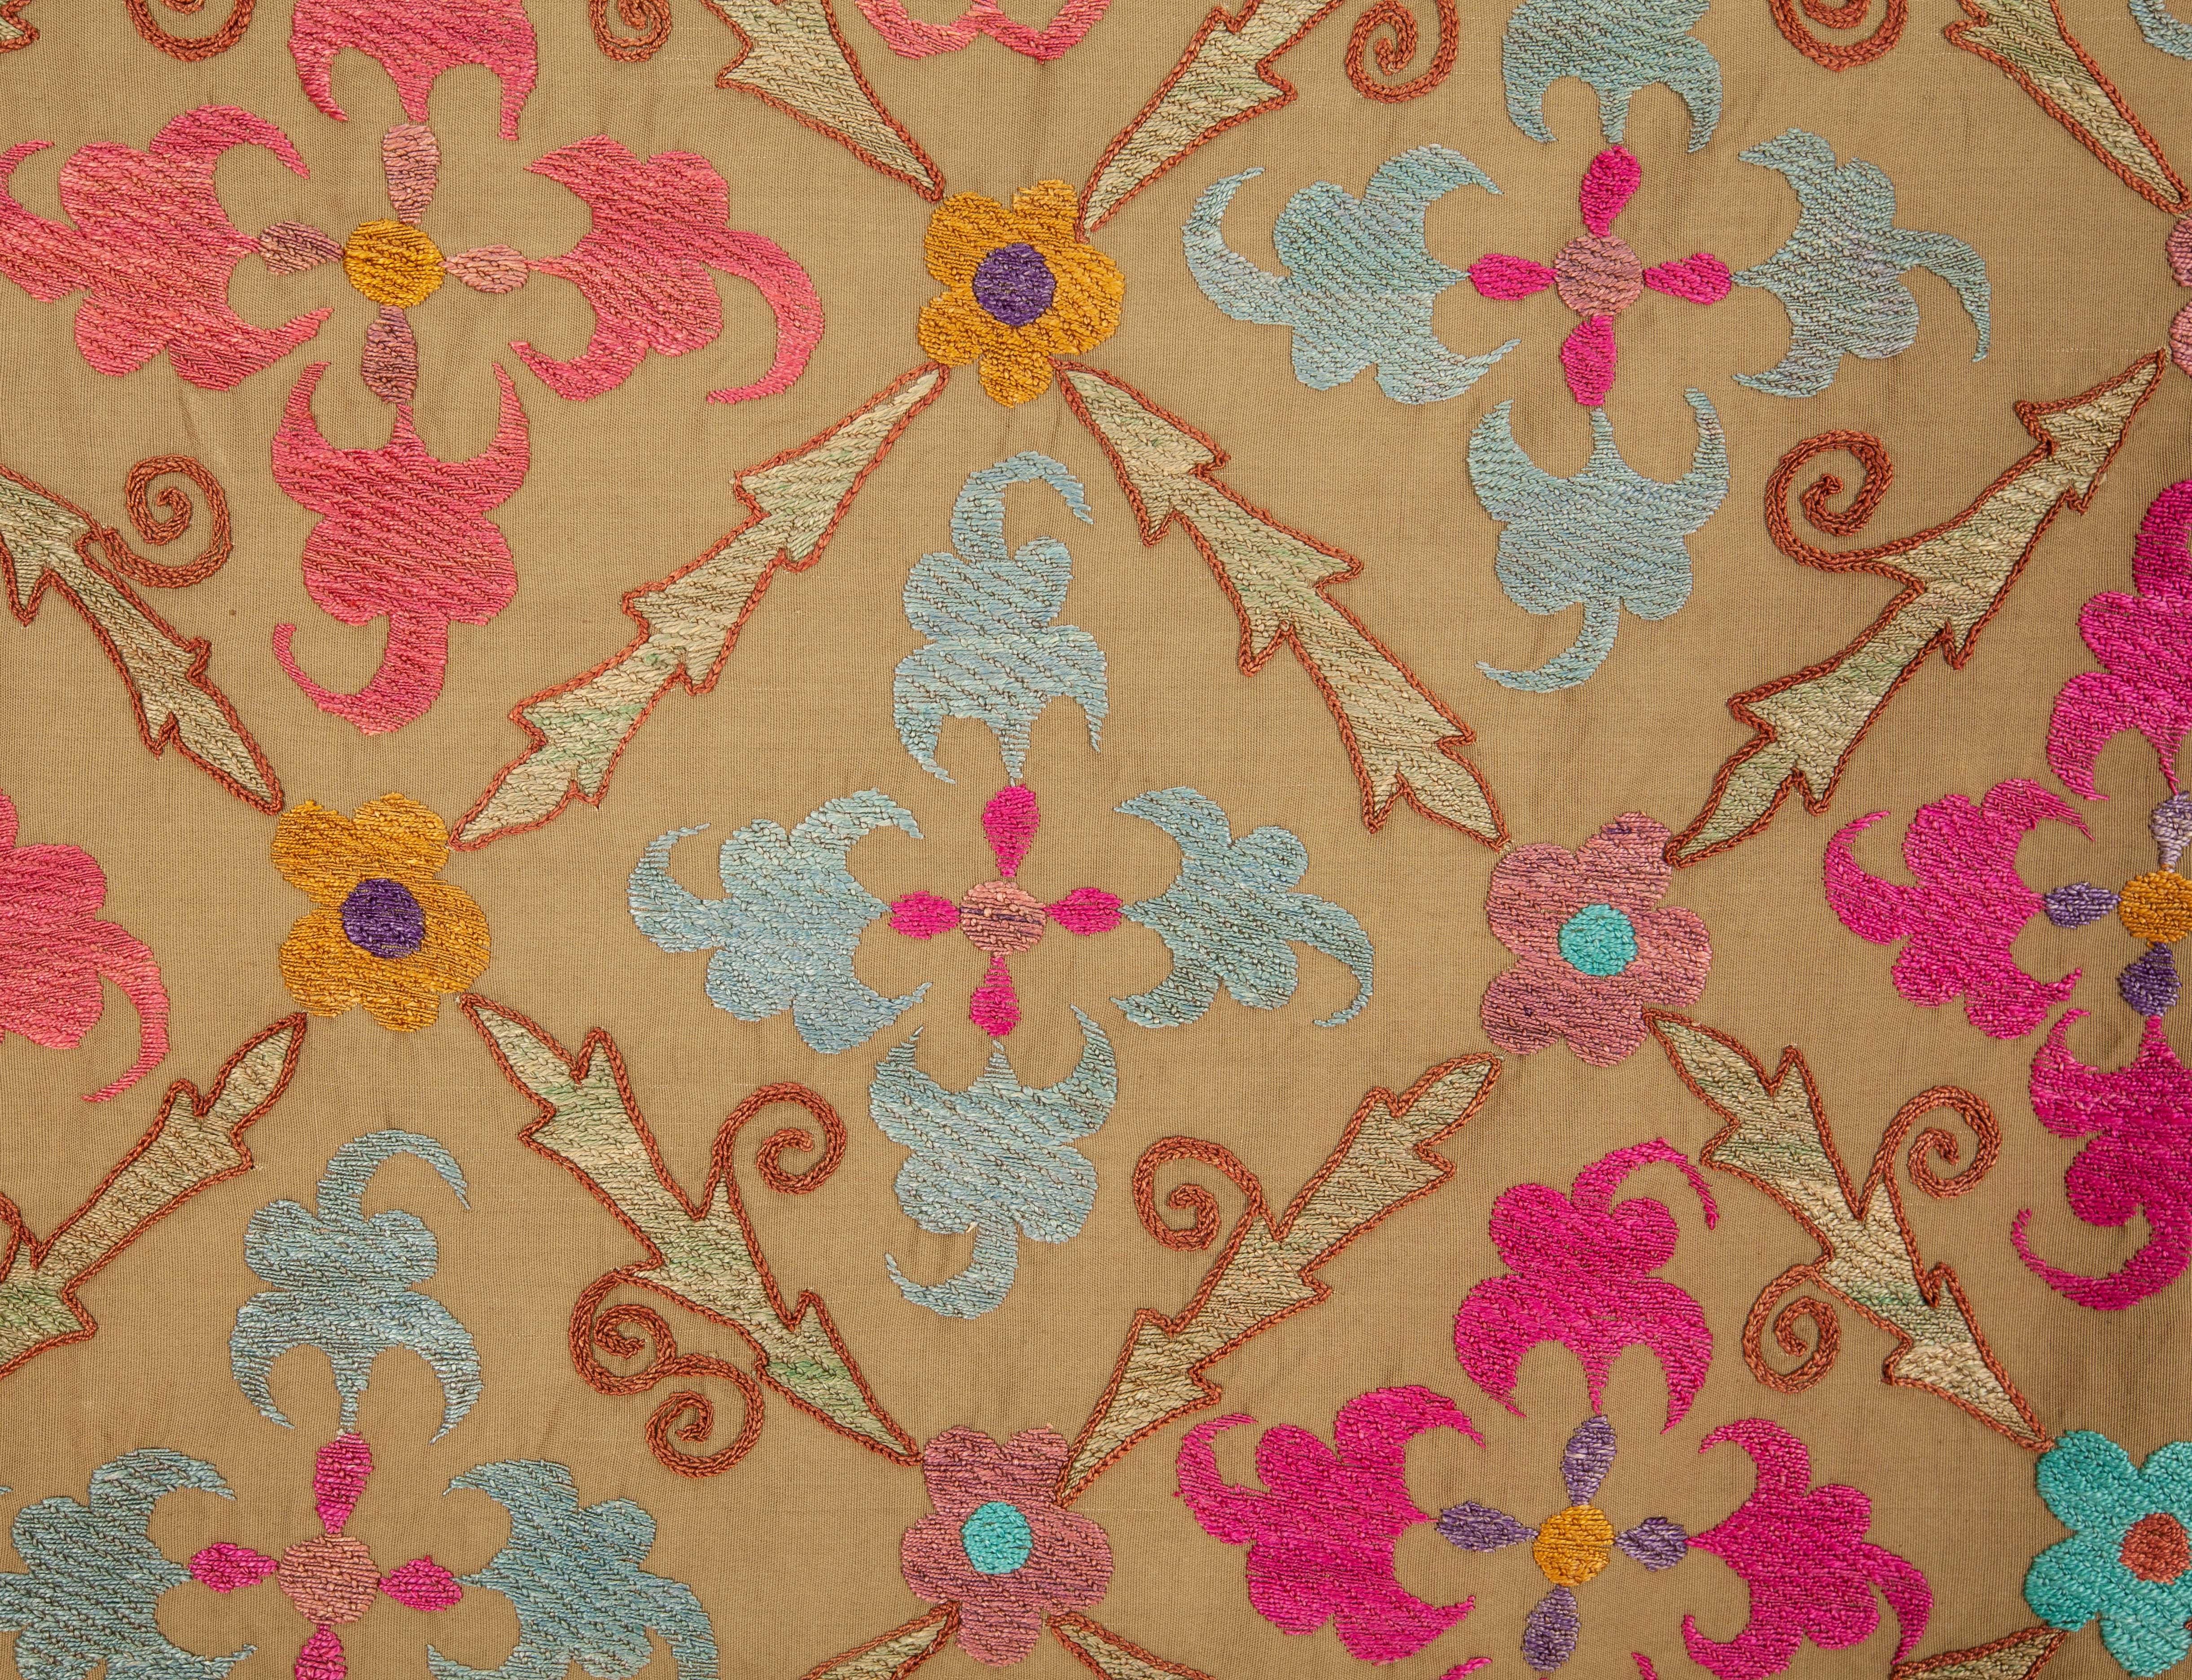 Embroidered Vintage Suzani from Bukhara Uzbekistan, 1960s-1970s